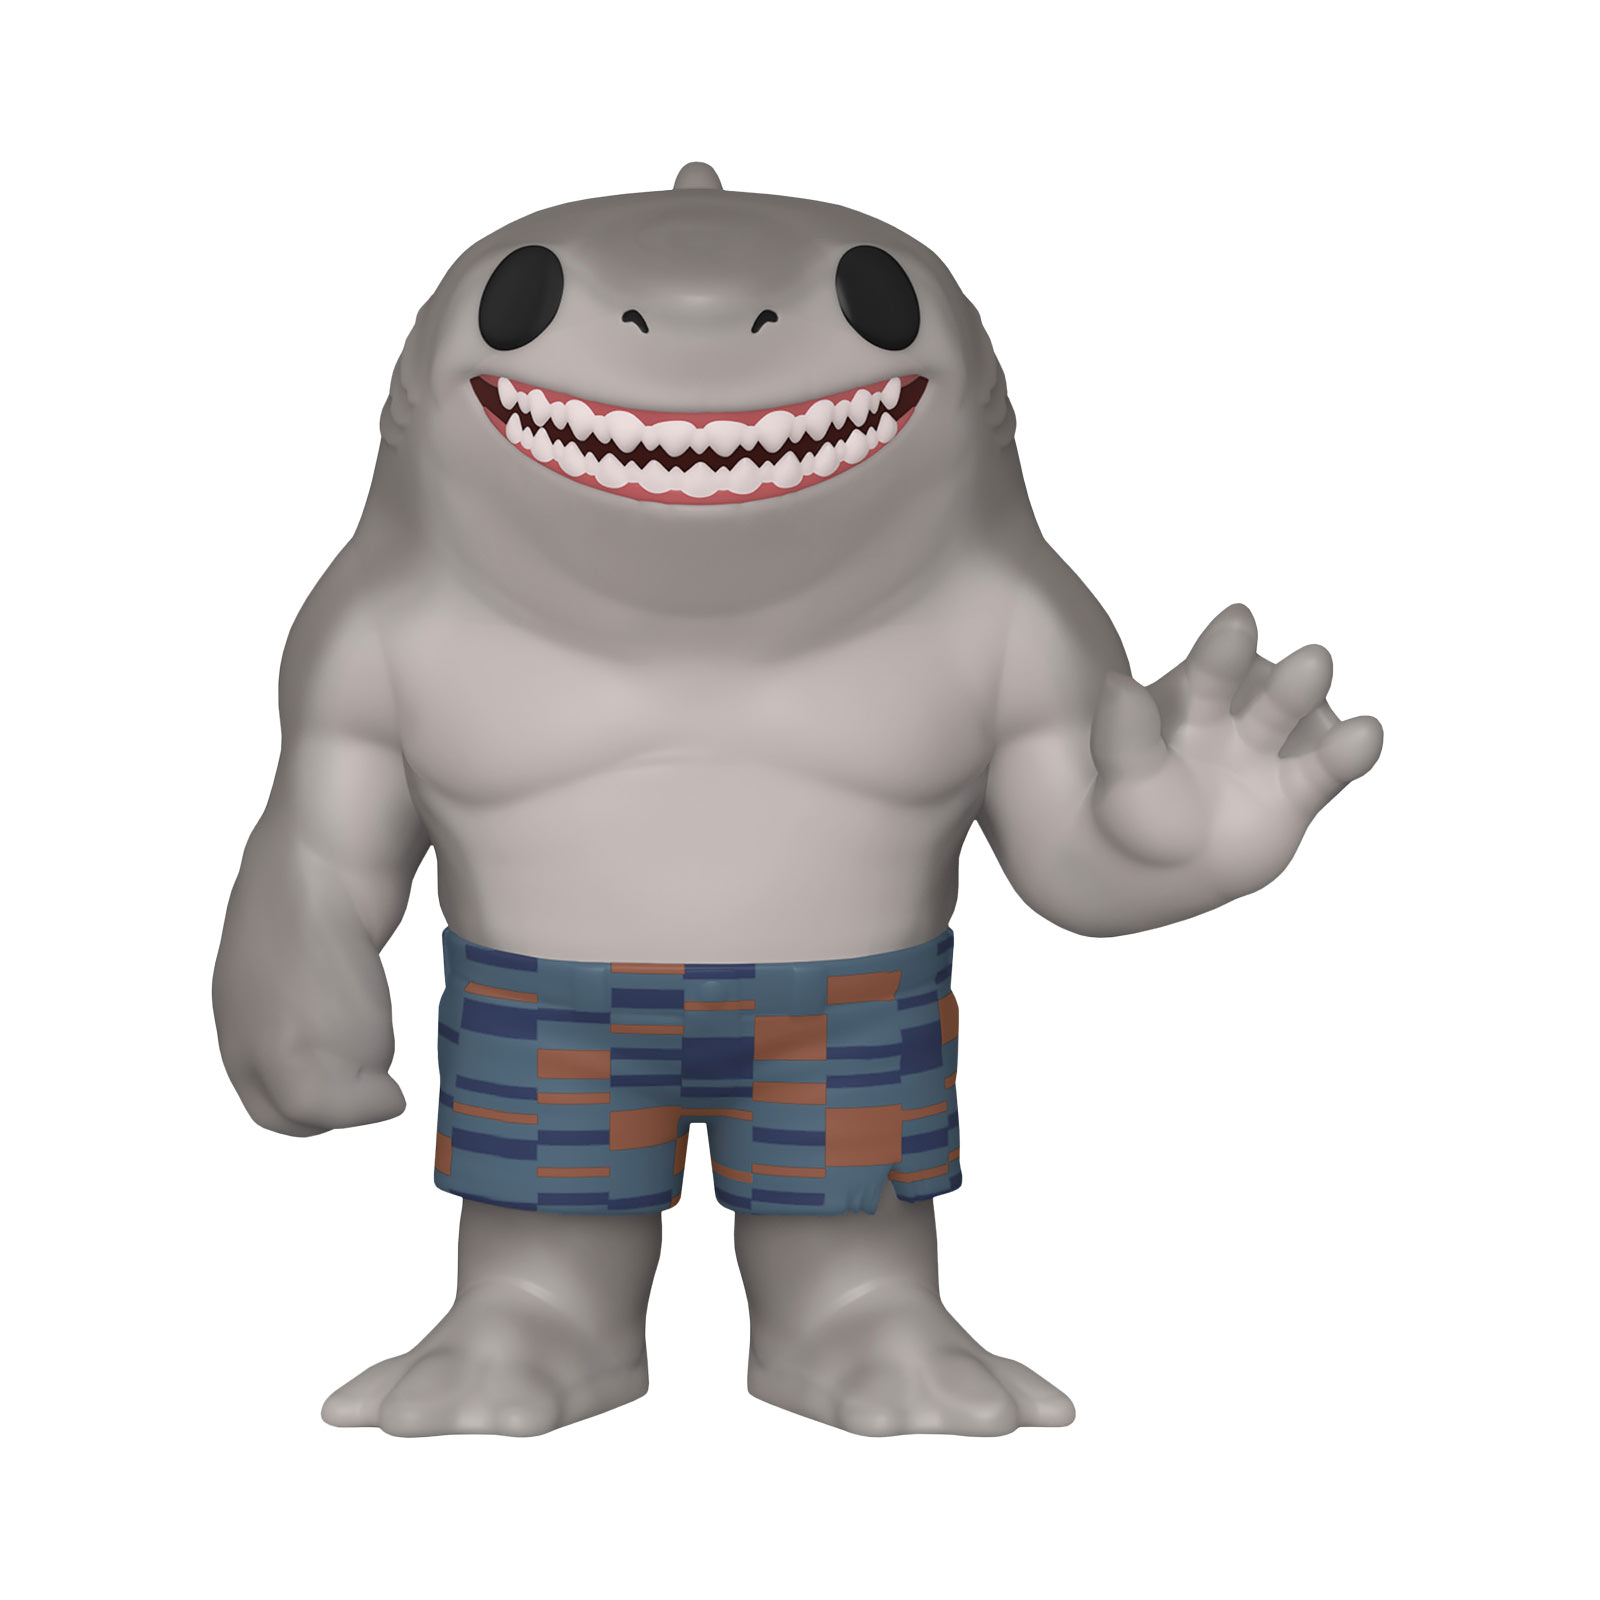 The Suicide Squad - King Shark Figurine Funko Pop